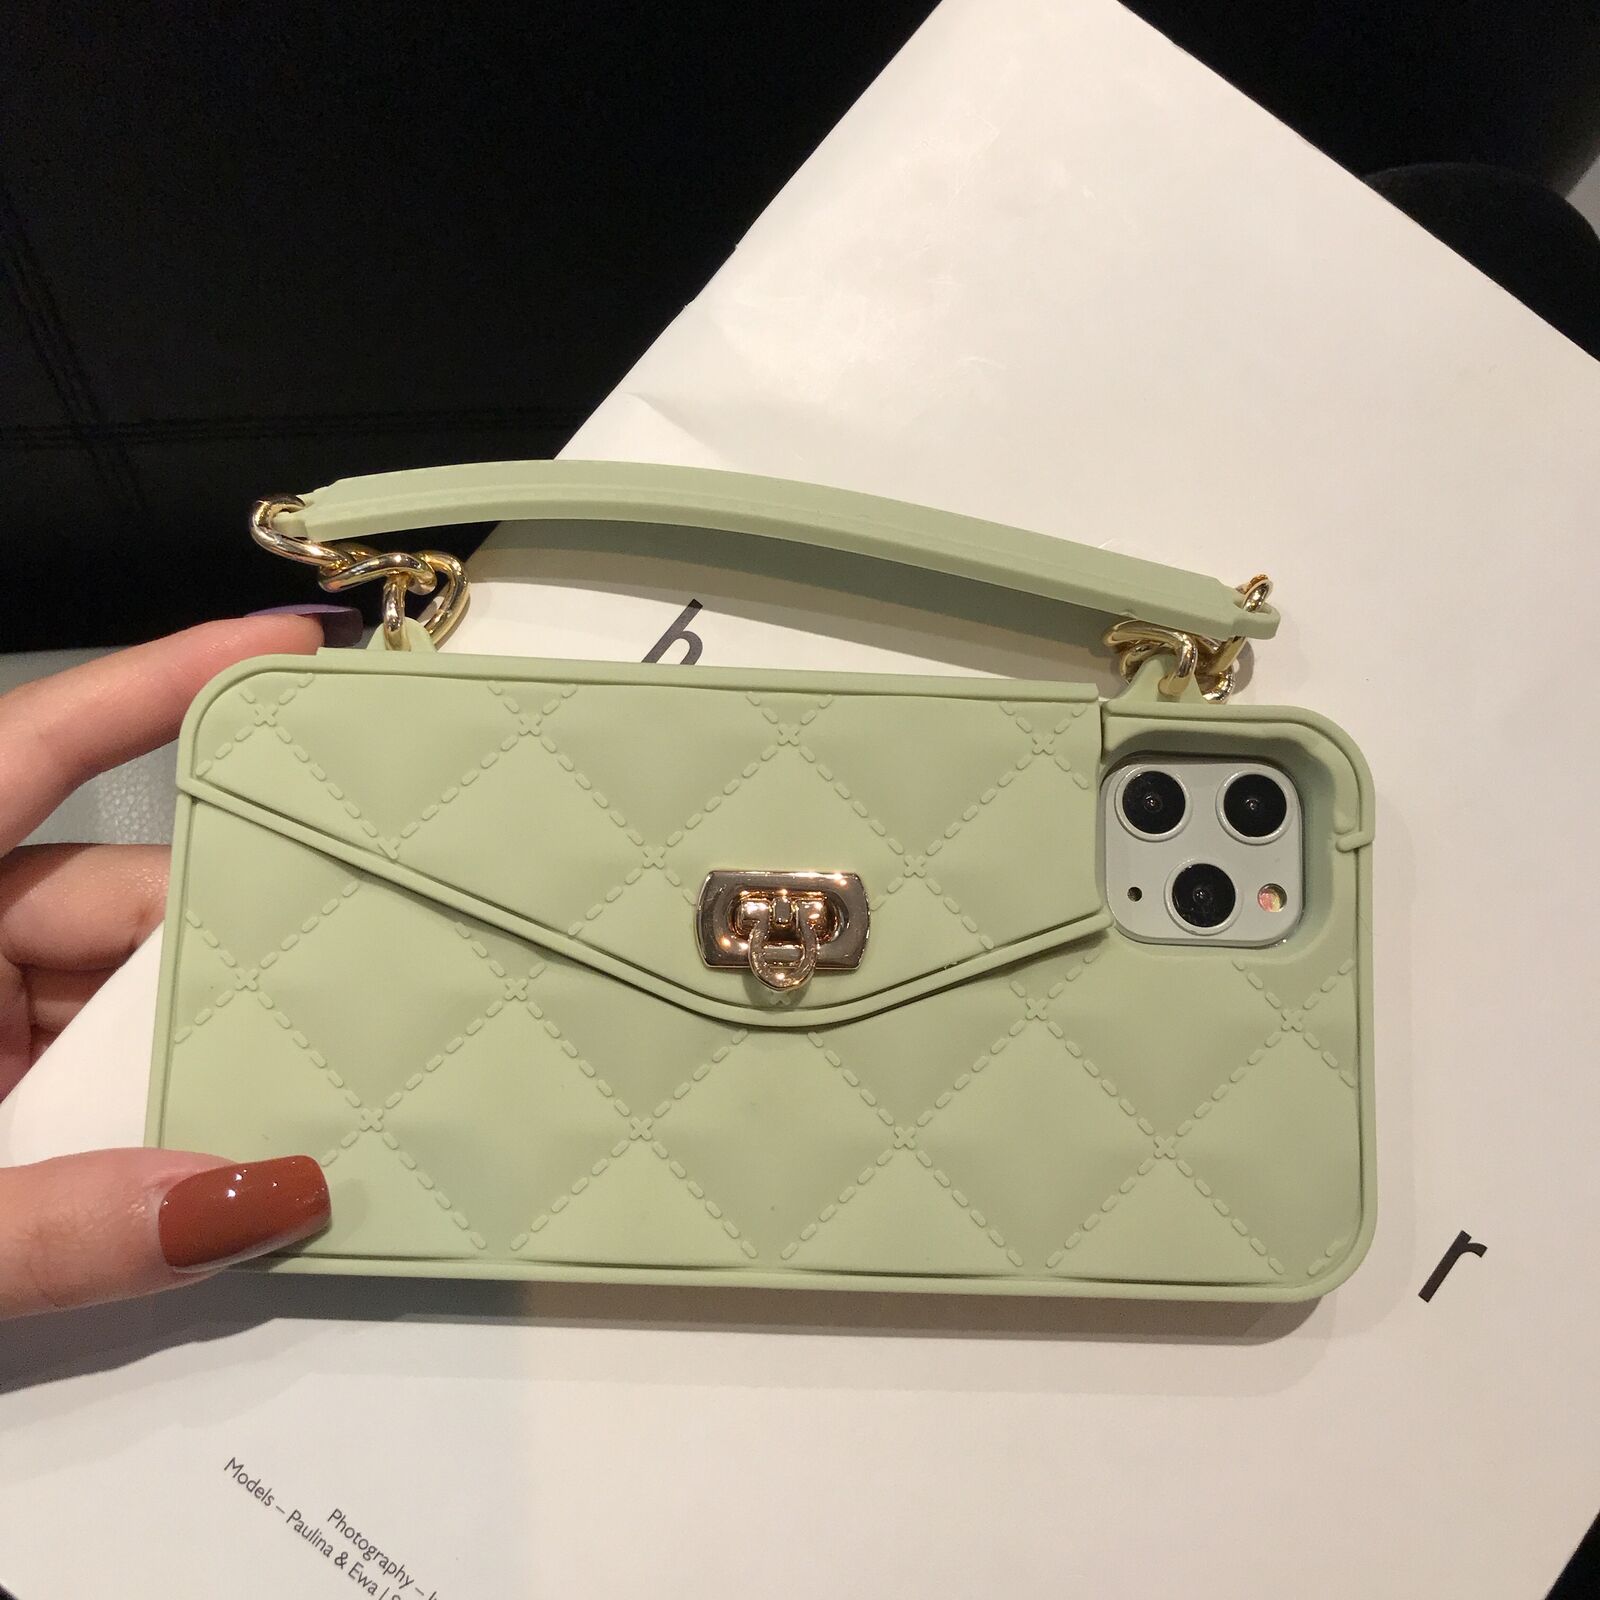 Handbag Crossbody Wallet Strap Case For iPhone